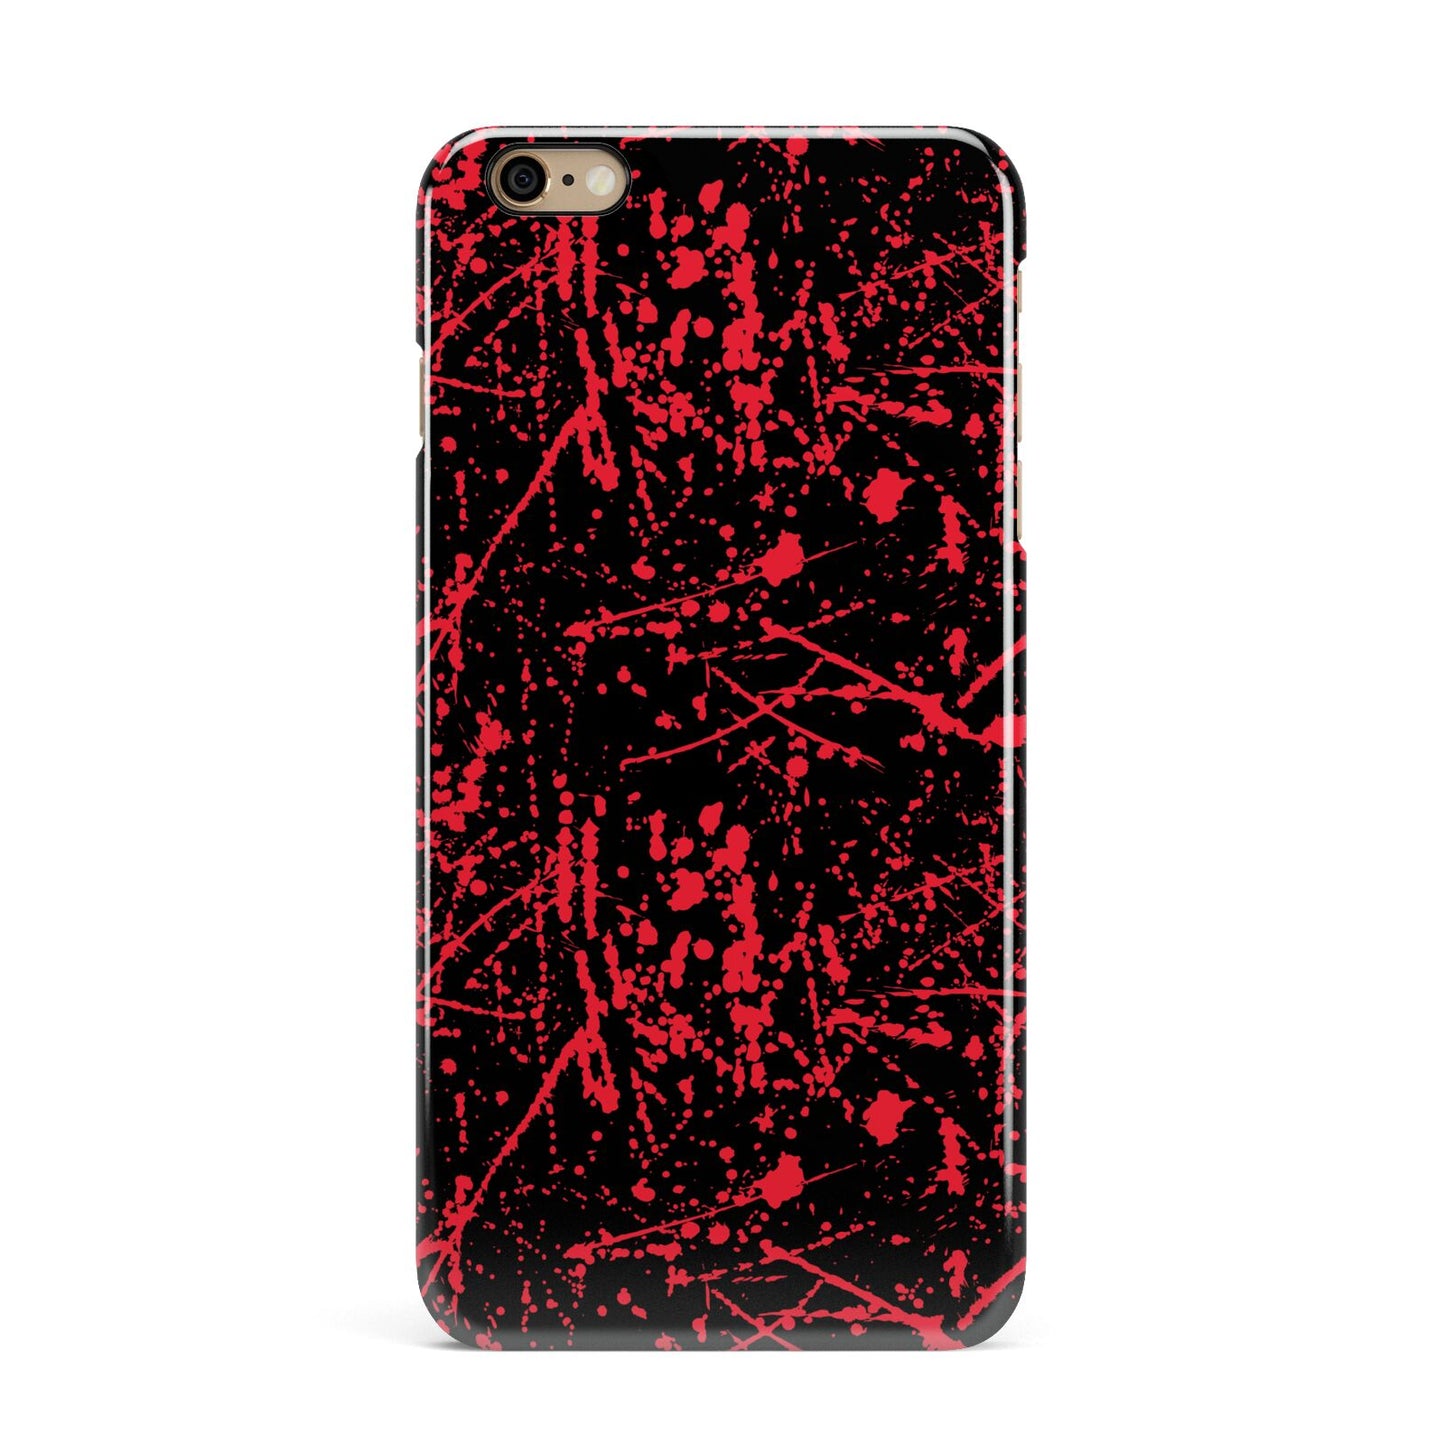 Blood Splatters iPhone 6 Plus 3D Snap Case on Gold Phone